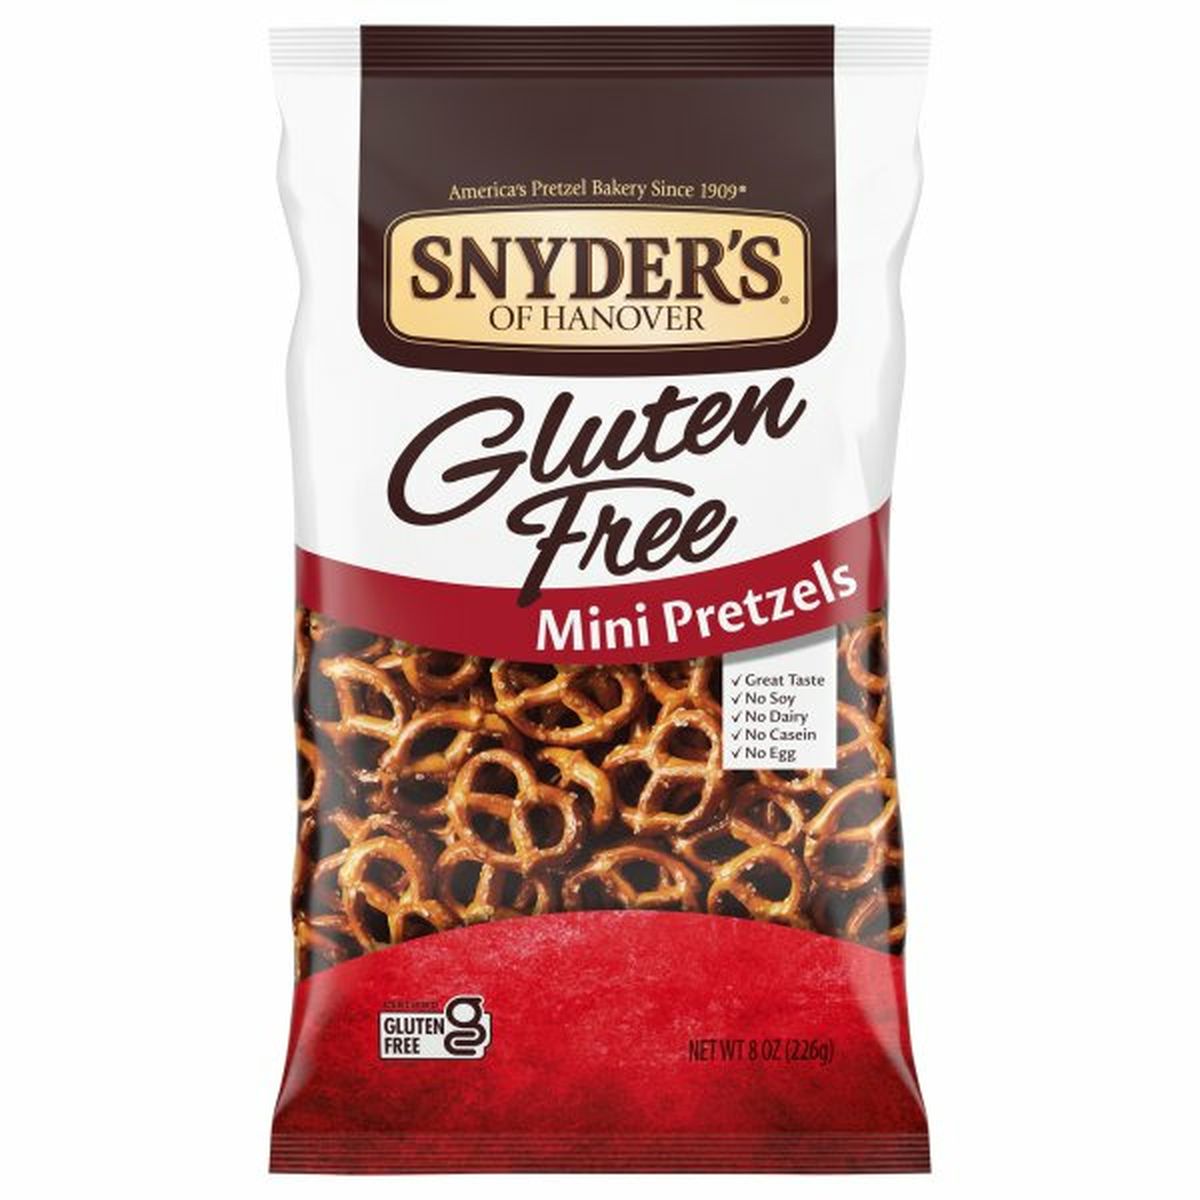 Calories in Snyder's of Hanovers Pretzels, Mini, Gluten Free